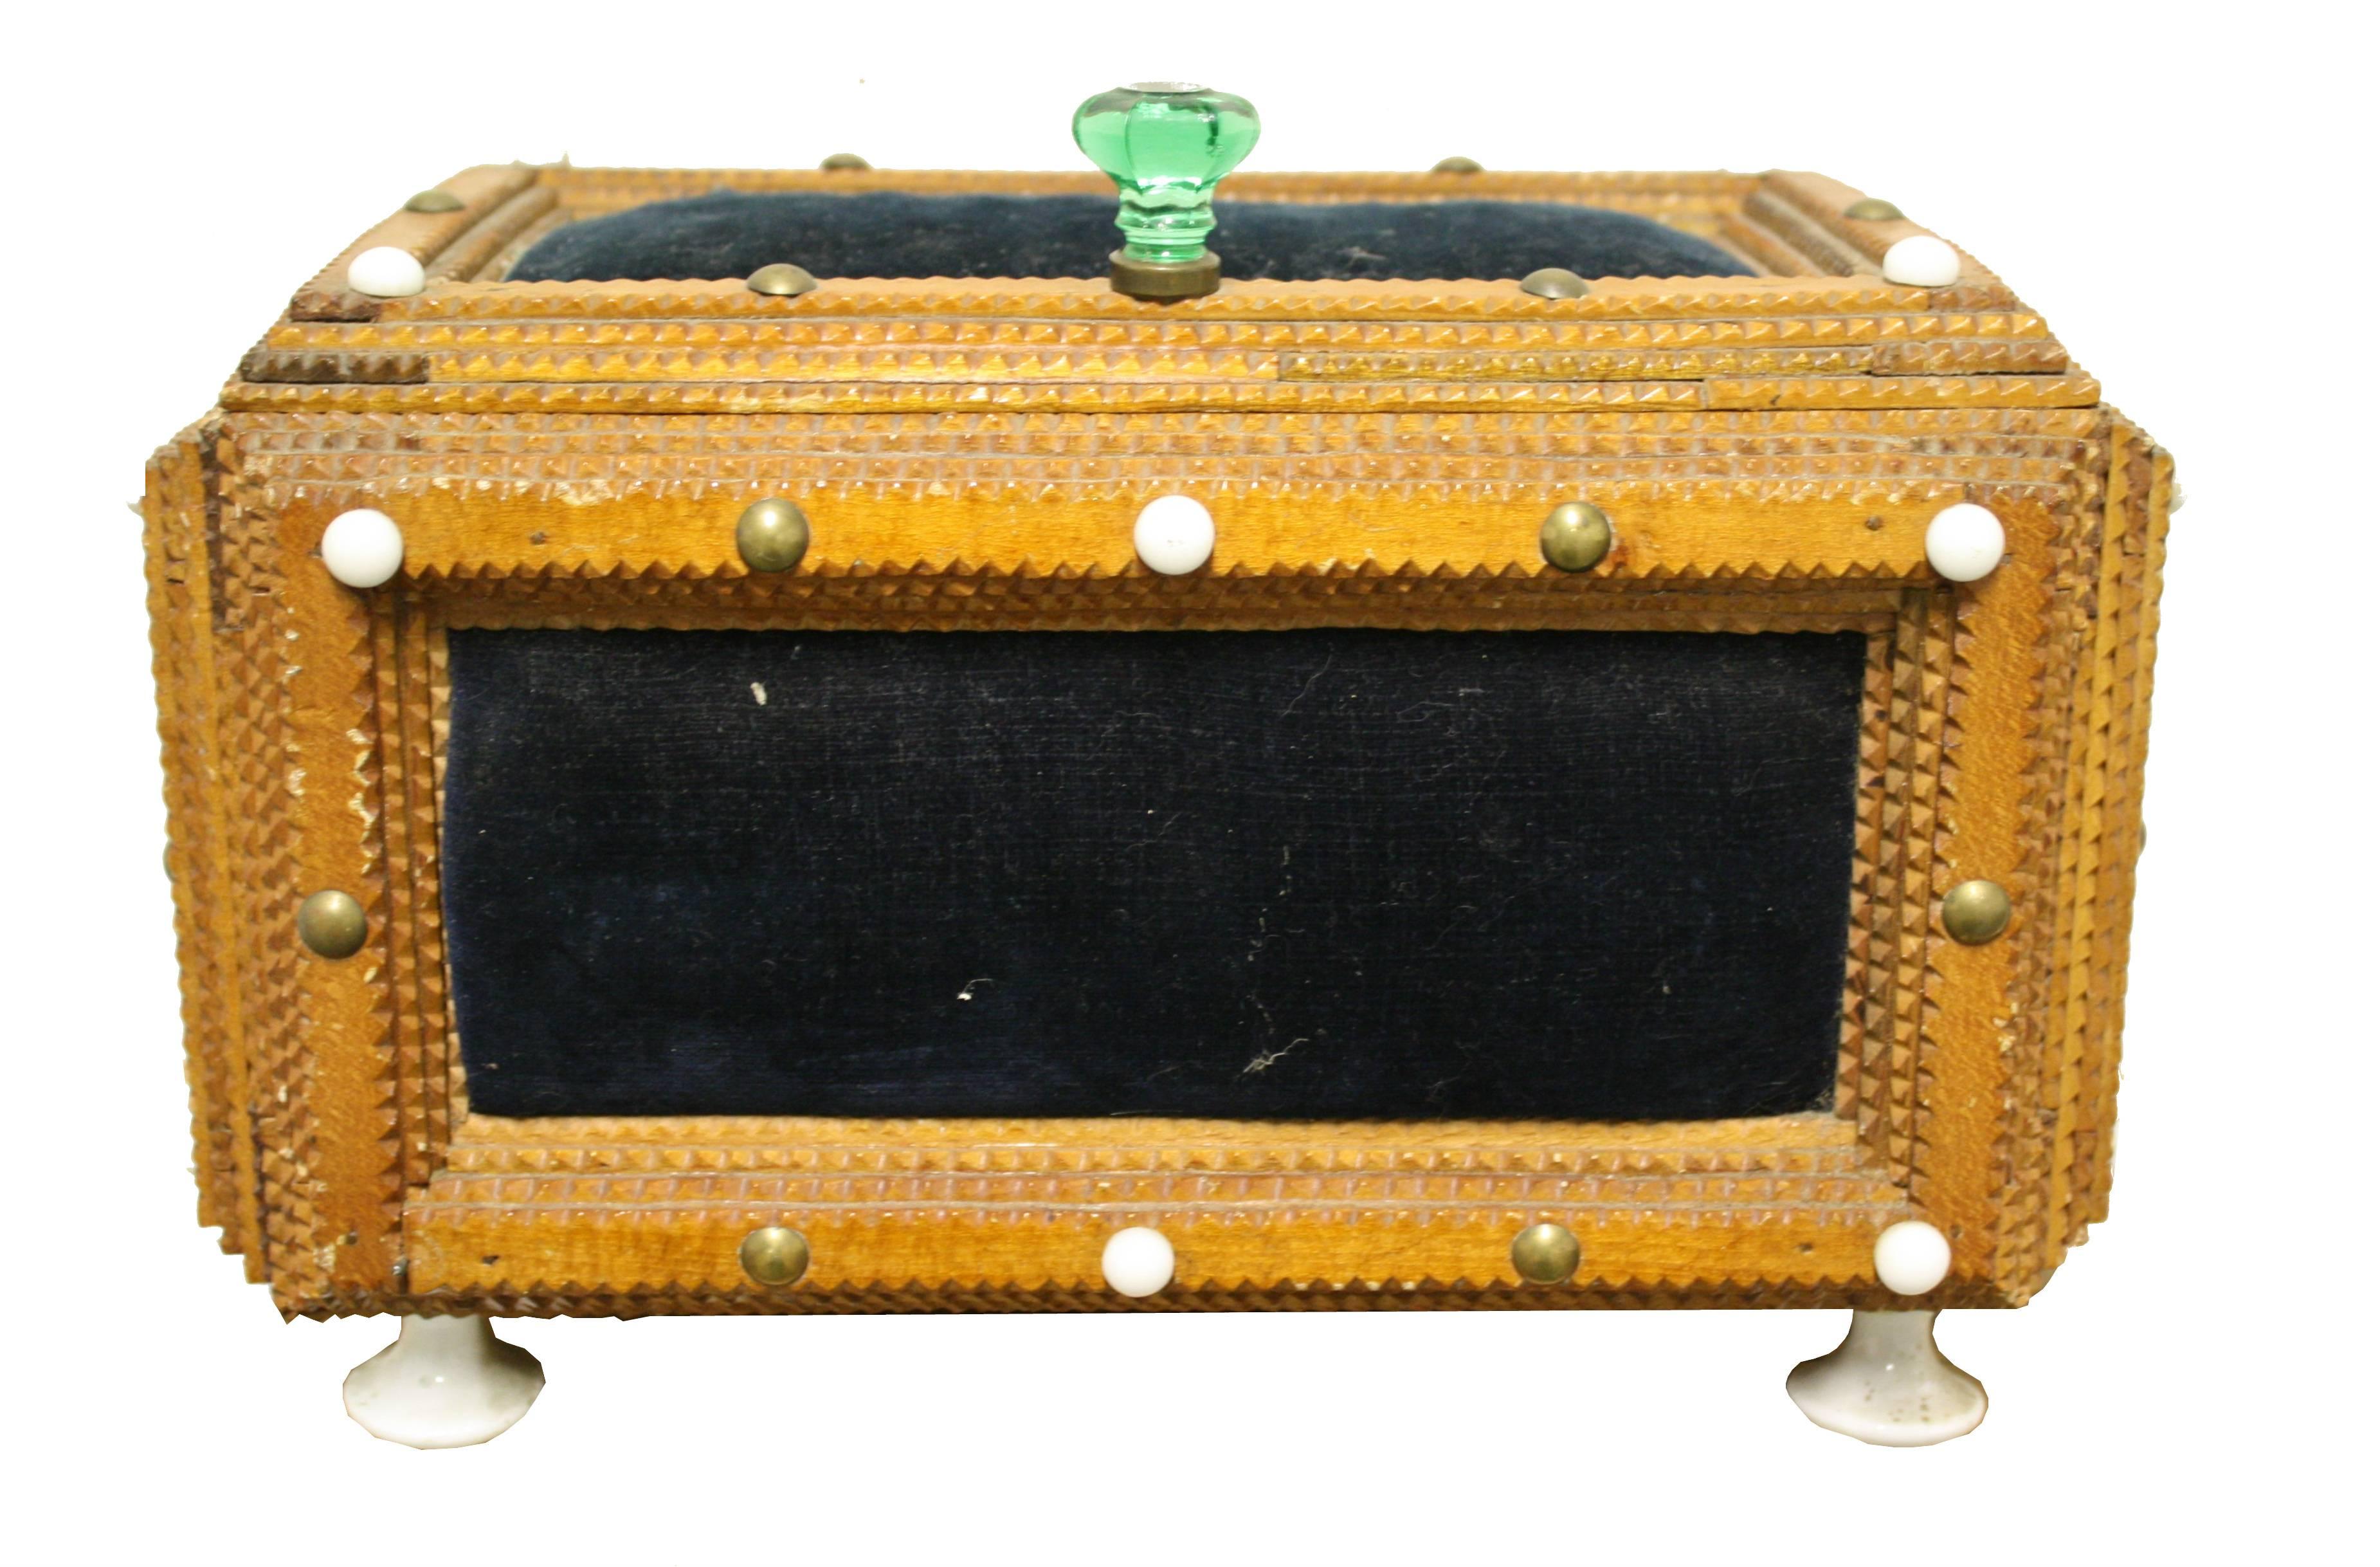 North American Antique Tramp Art Box, 1920s For Sale